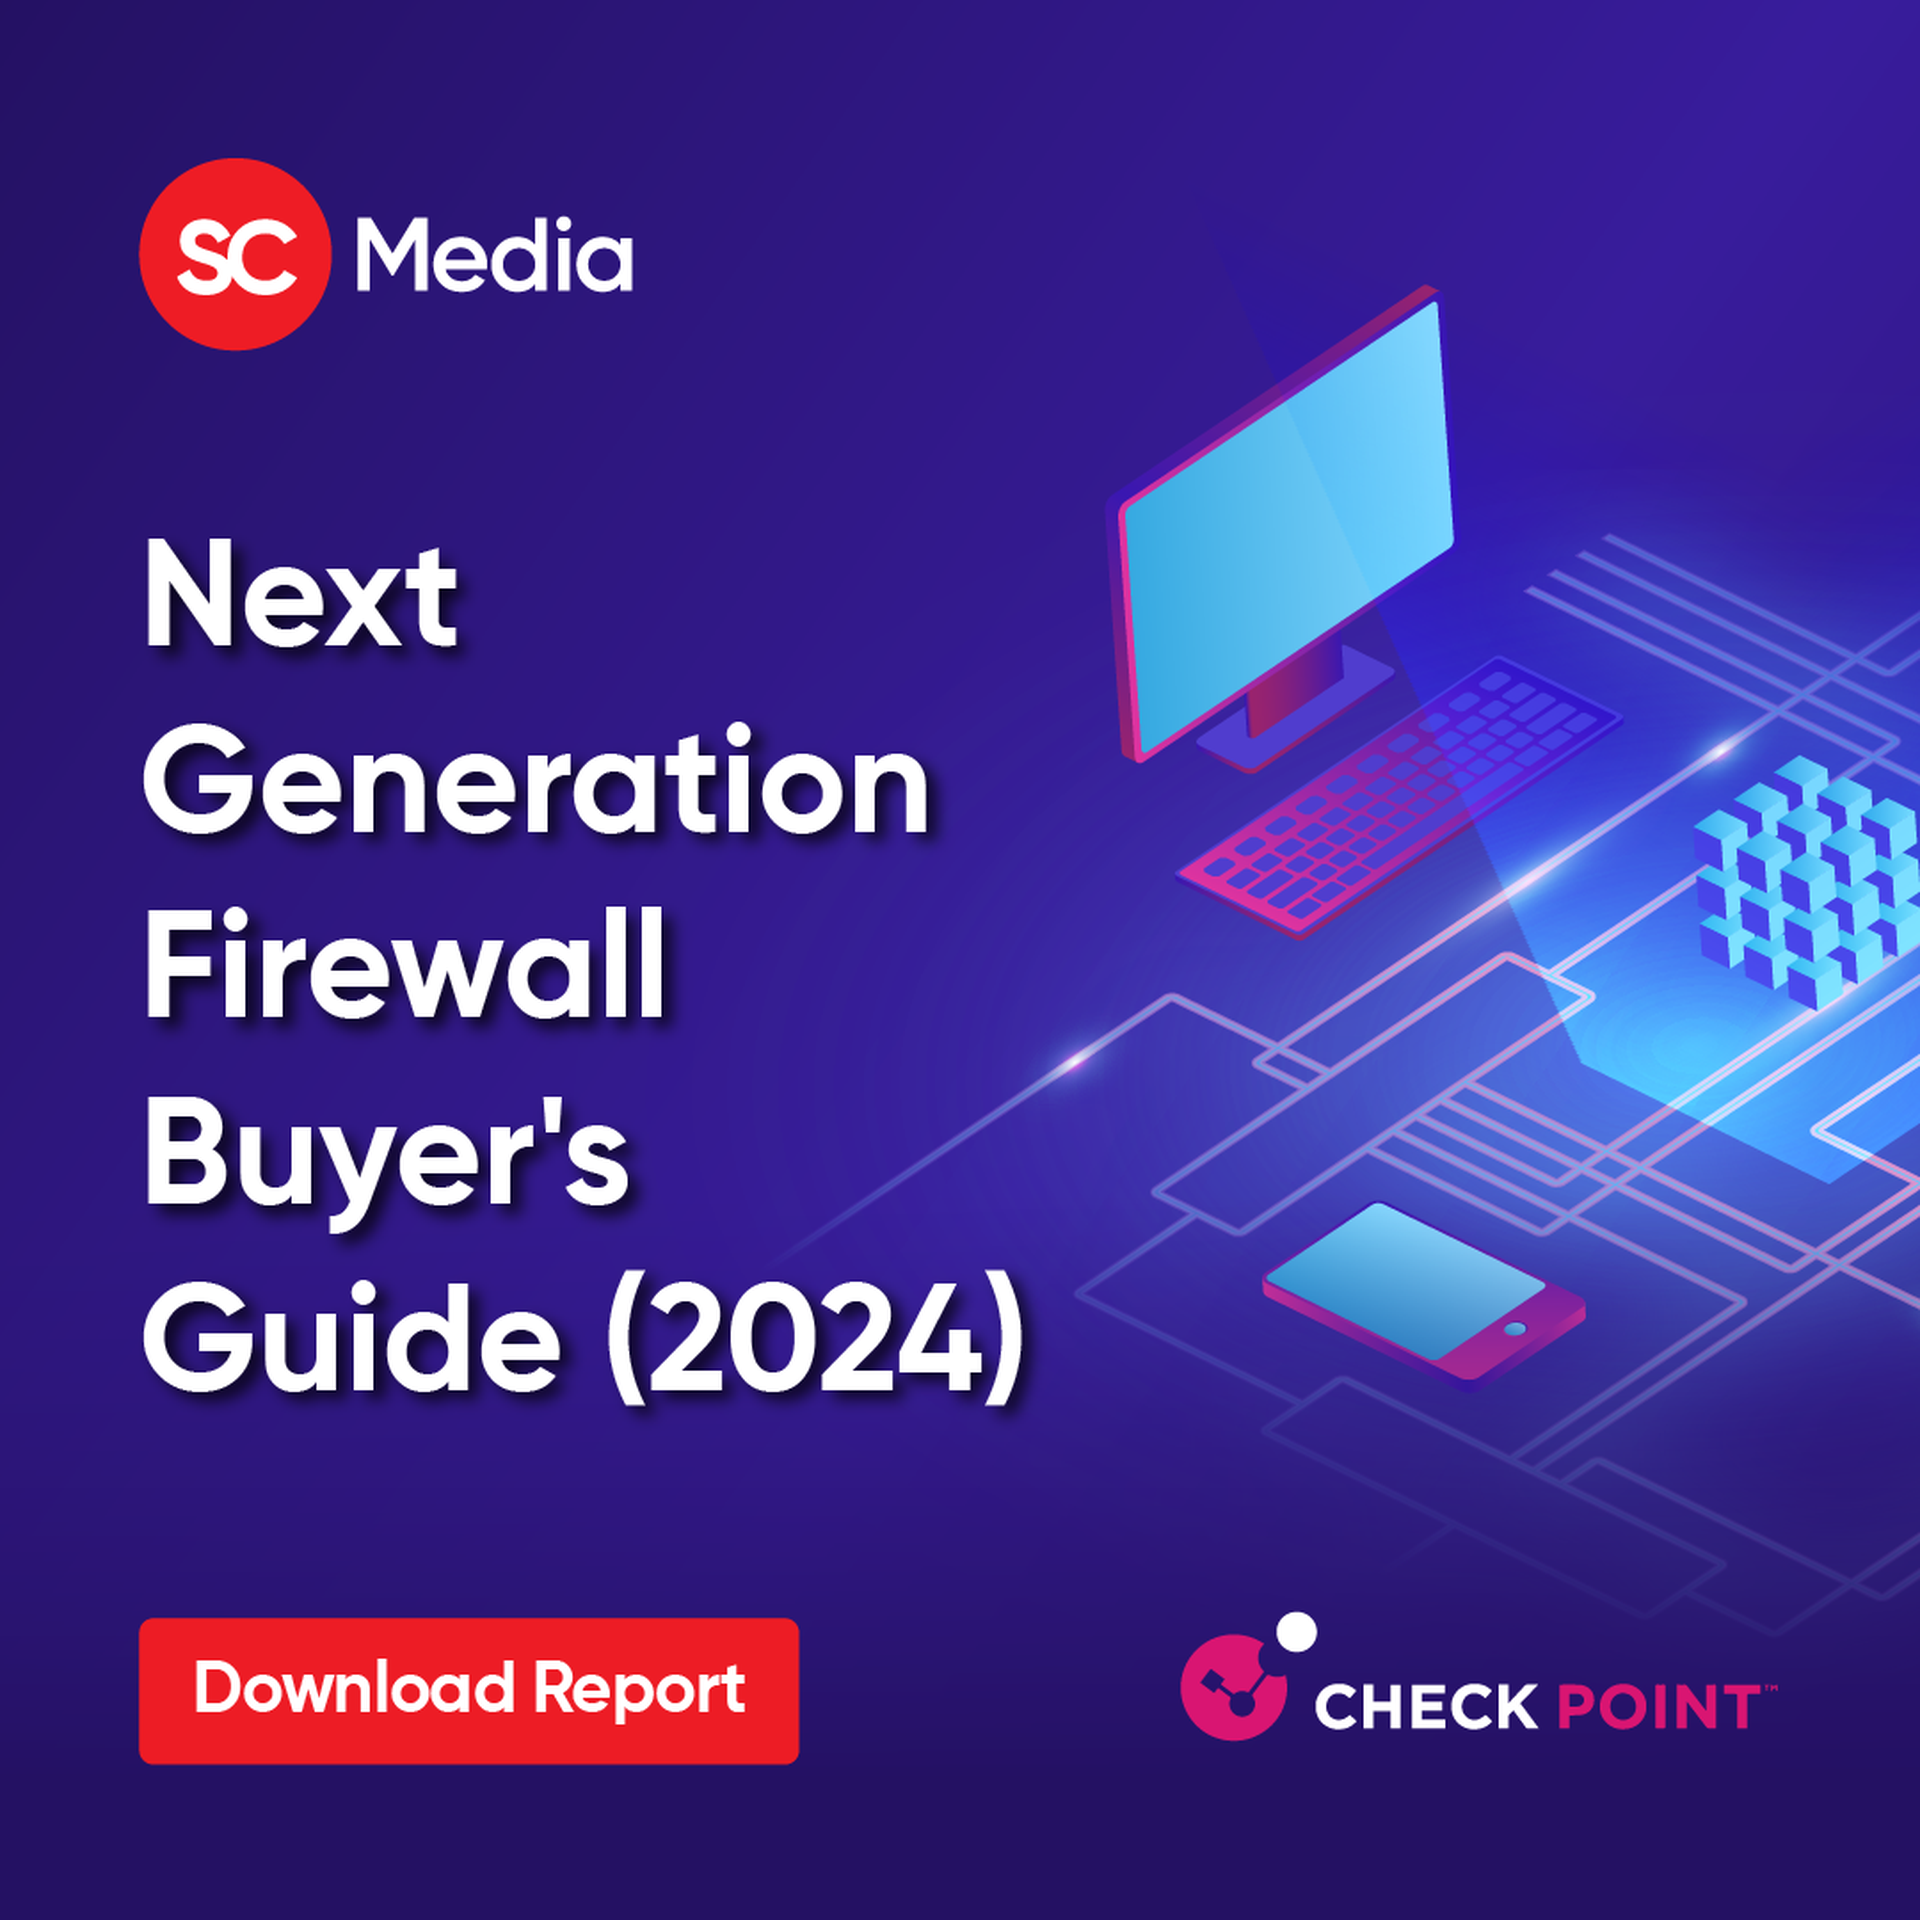 Next Generation Firewall Buyer’s Guide (2024)